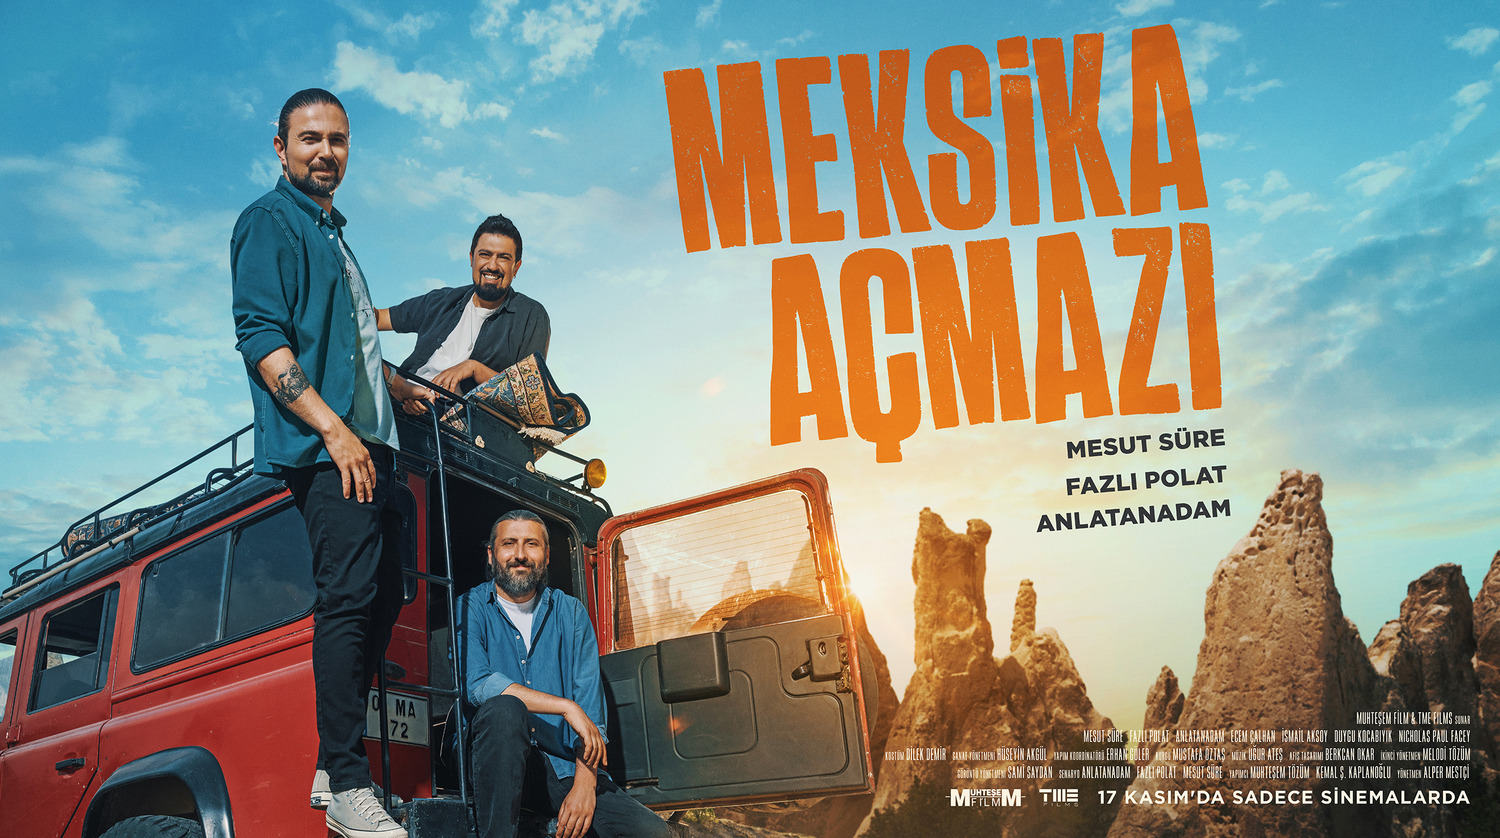 Extra Large Movie Poster Image for Meksika Açmazi (#5 of 6)